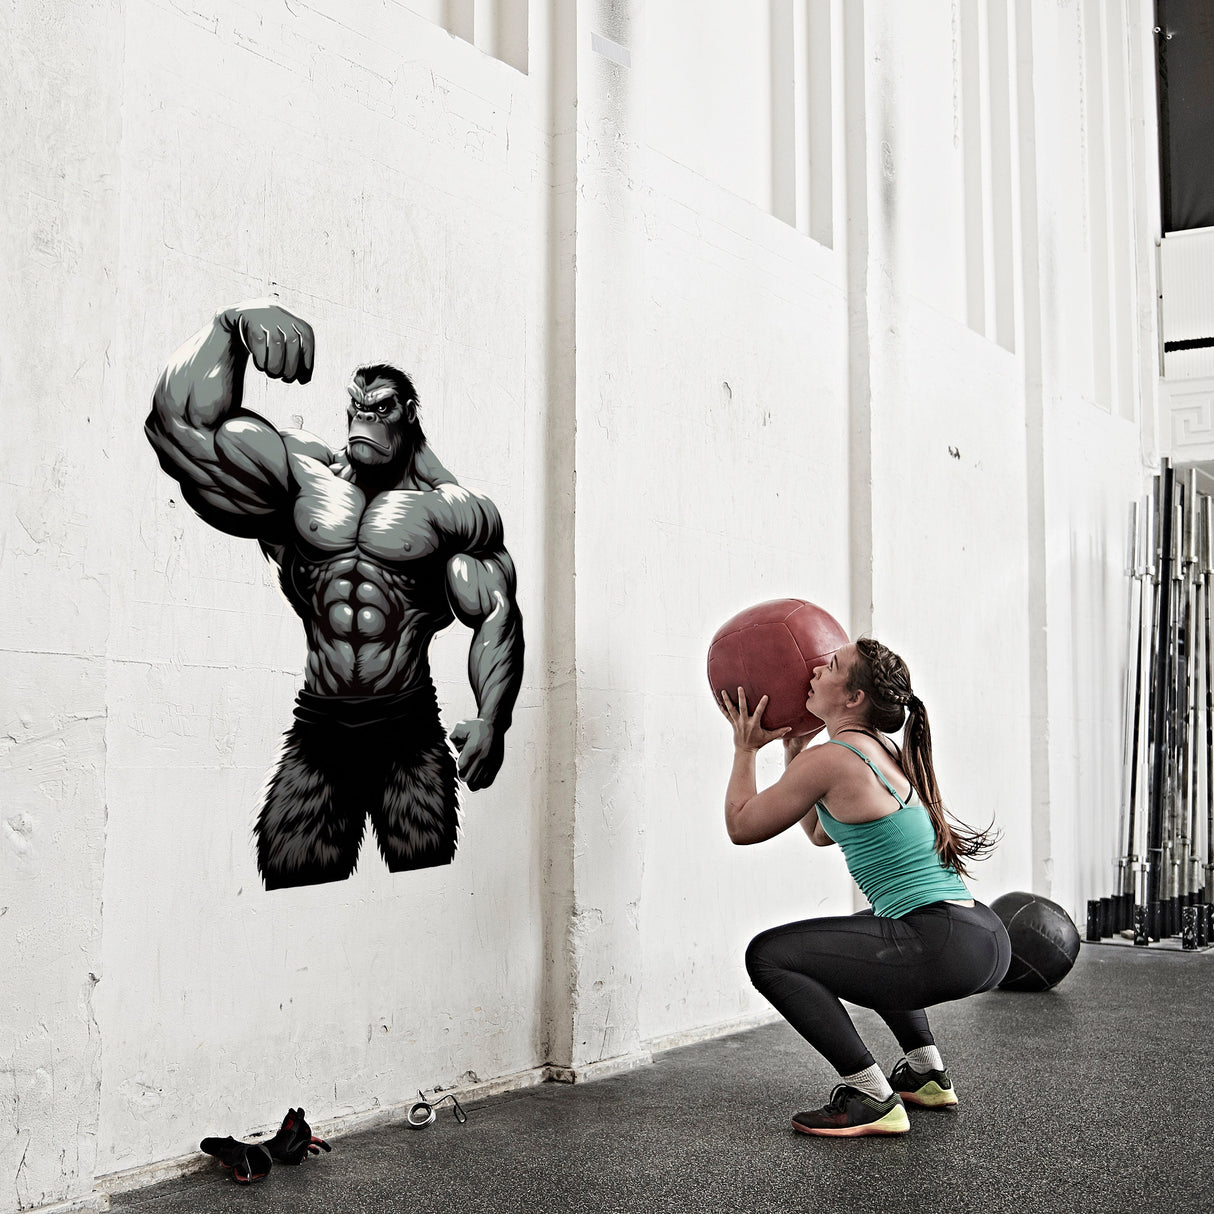 Beast Mode Inspired Fitness Gorilla Wall Decal - Gym Motivation Sticker